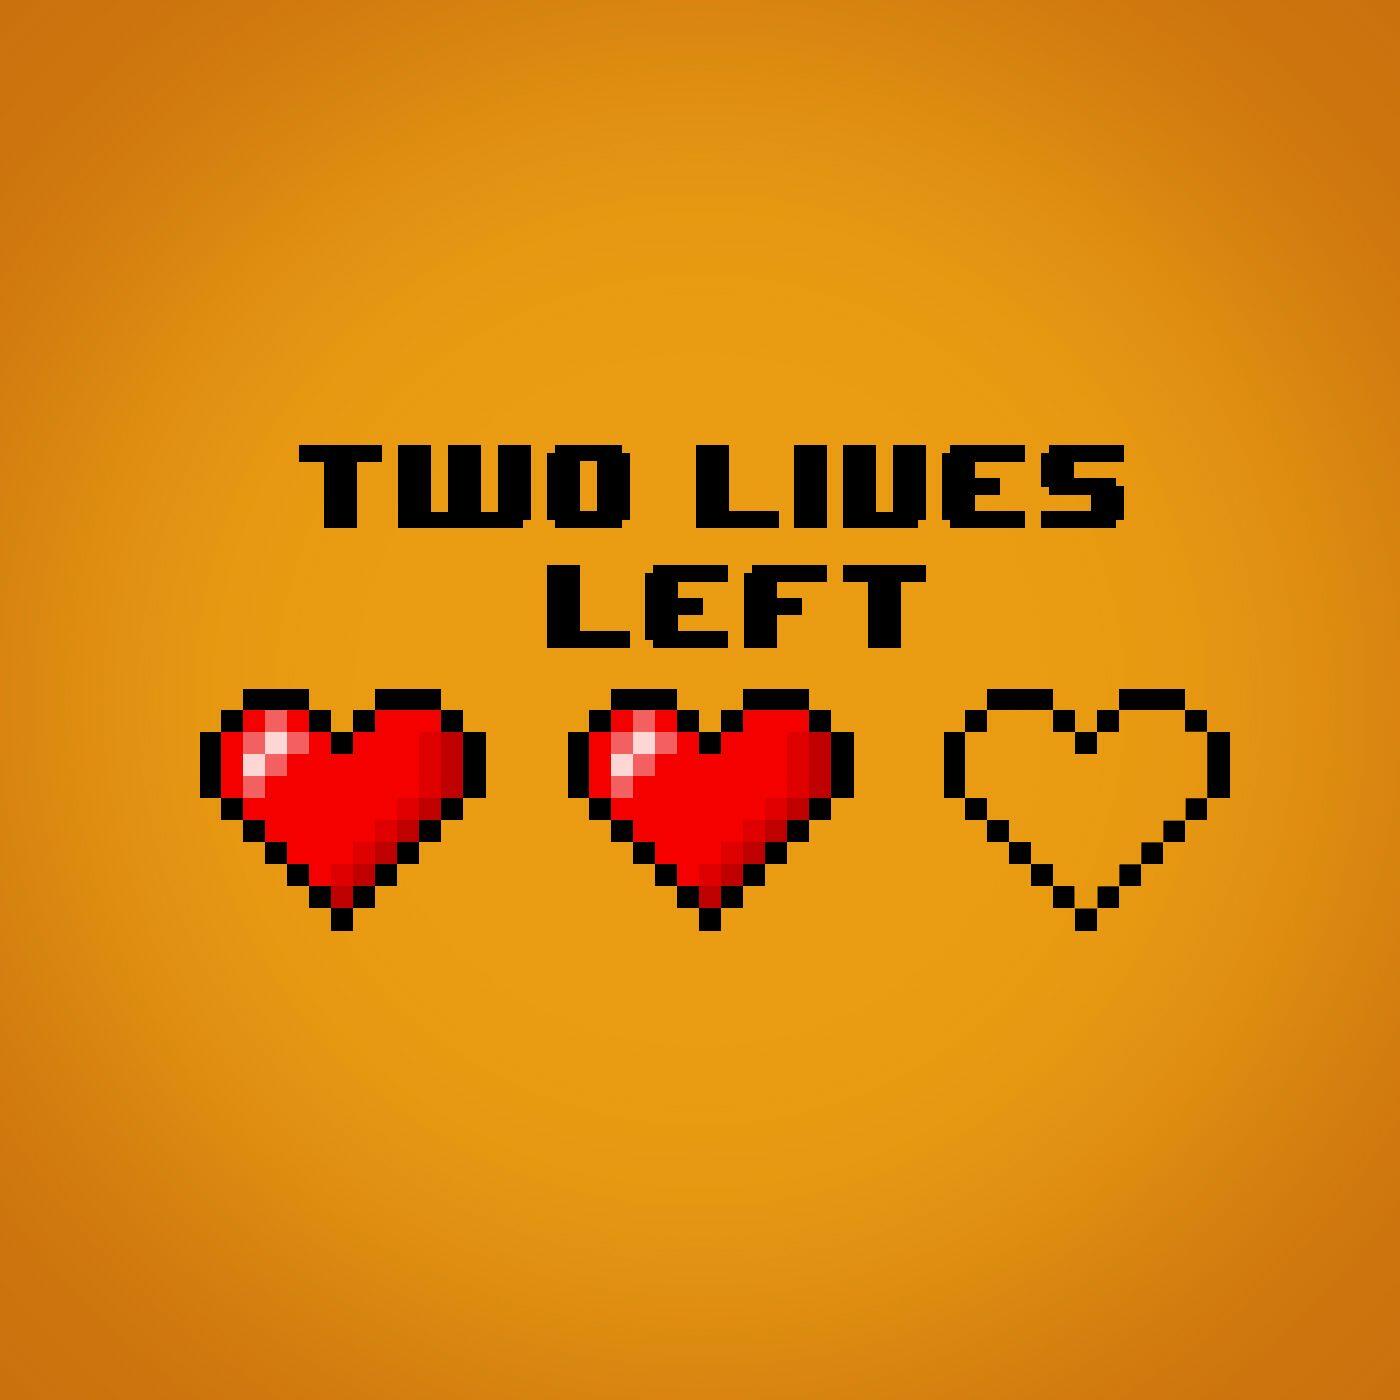 Life 2 live. Live left left. Lefty Life. Lived или left. One Life left NES.